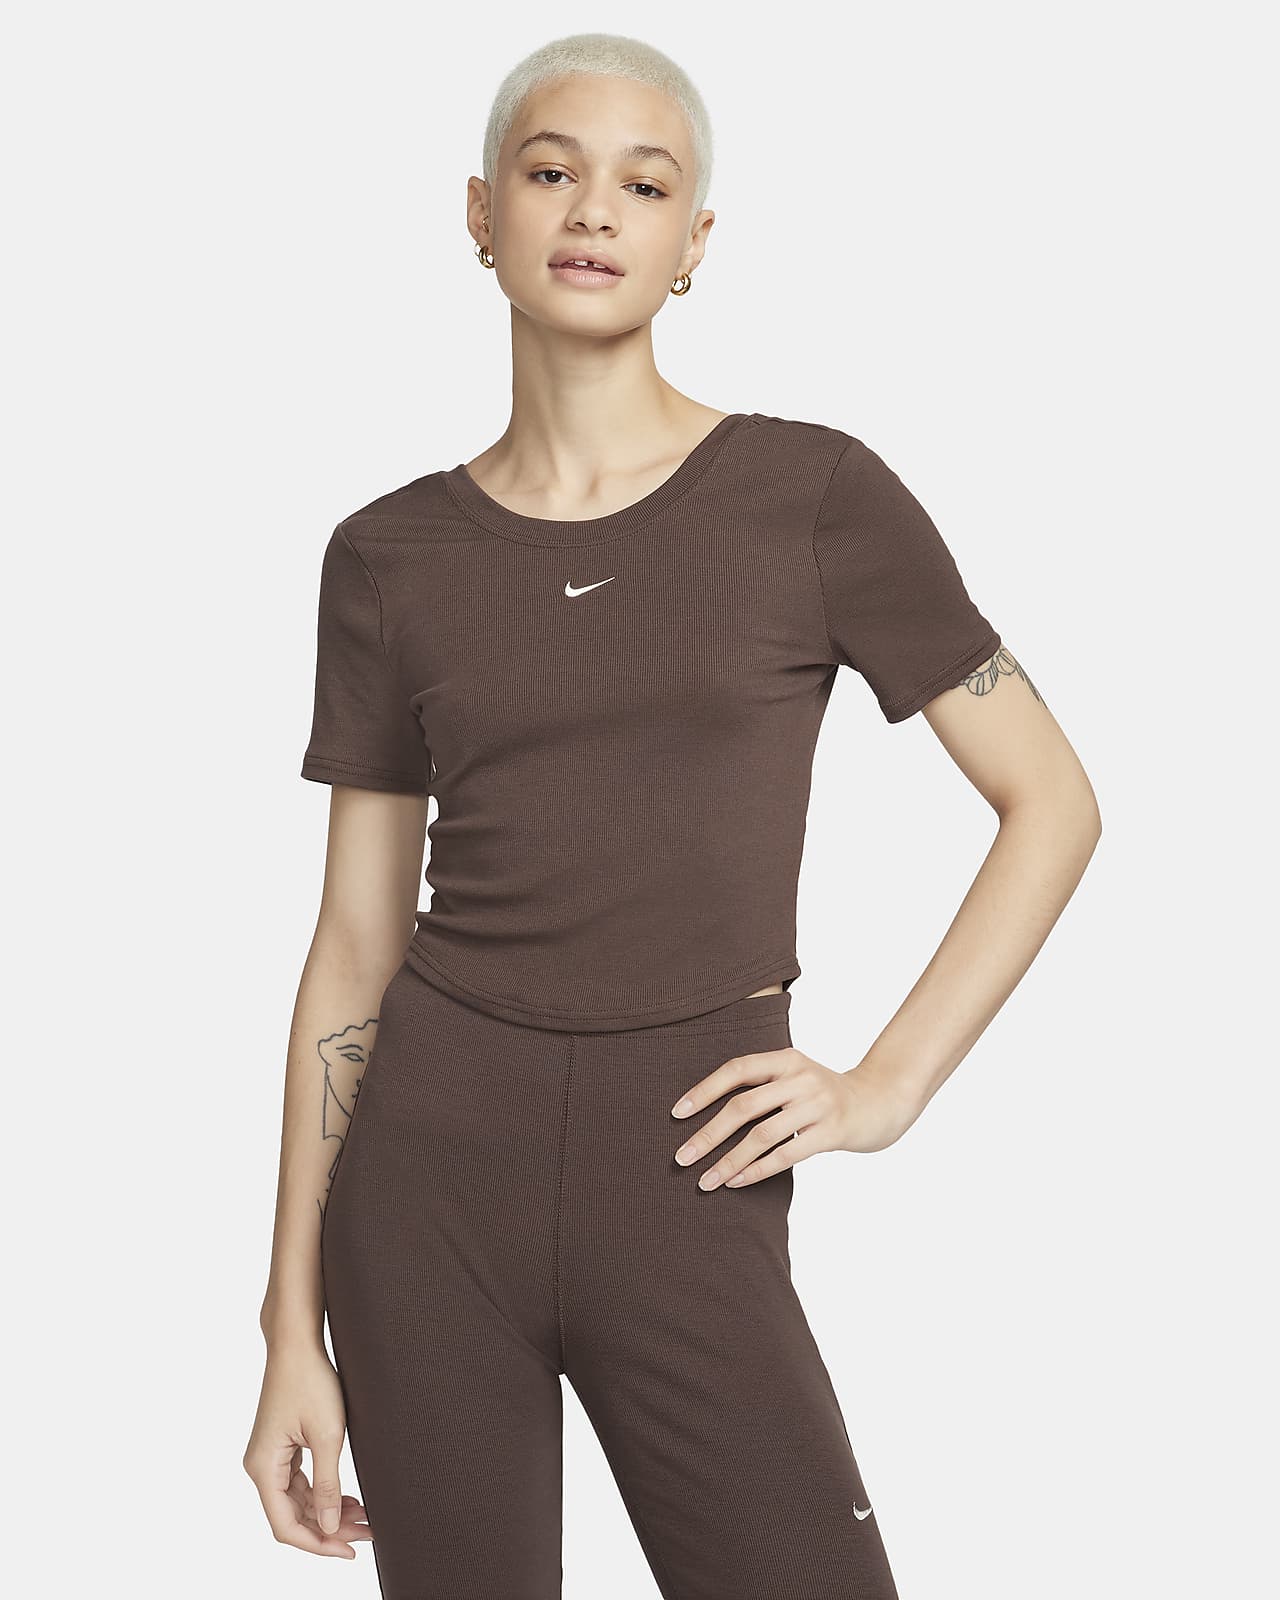 Nike Sportswear Chill Knit Sıkı Kesimli Yuvarlak Sırtlı Kısa Kollu Mini Fitilli Kadın Üstü